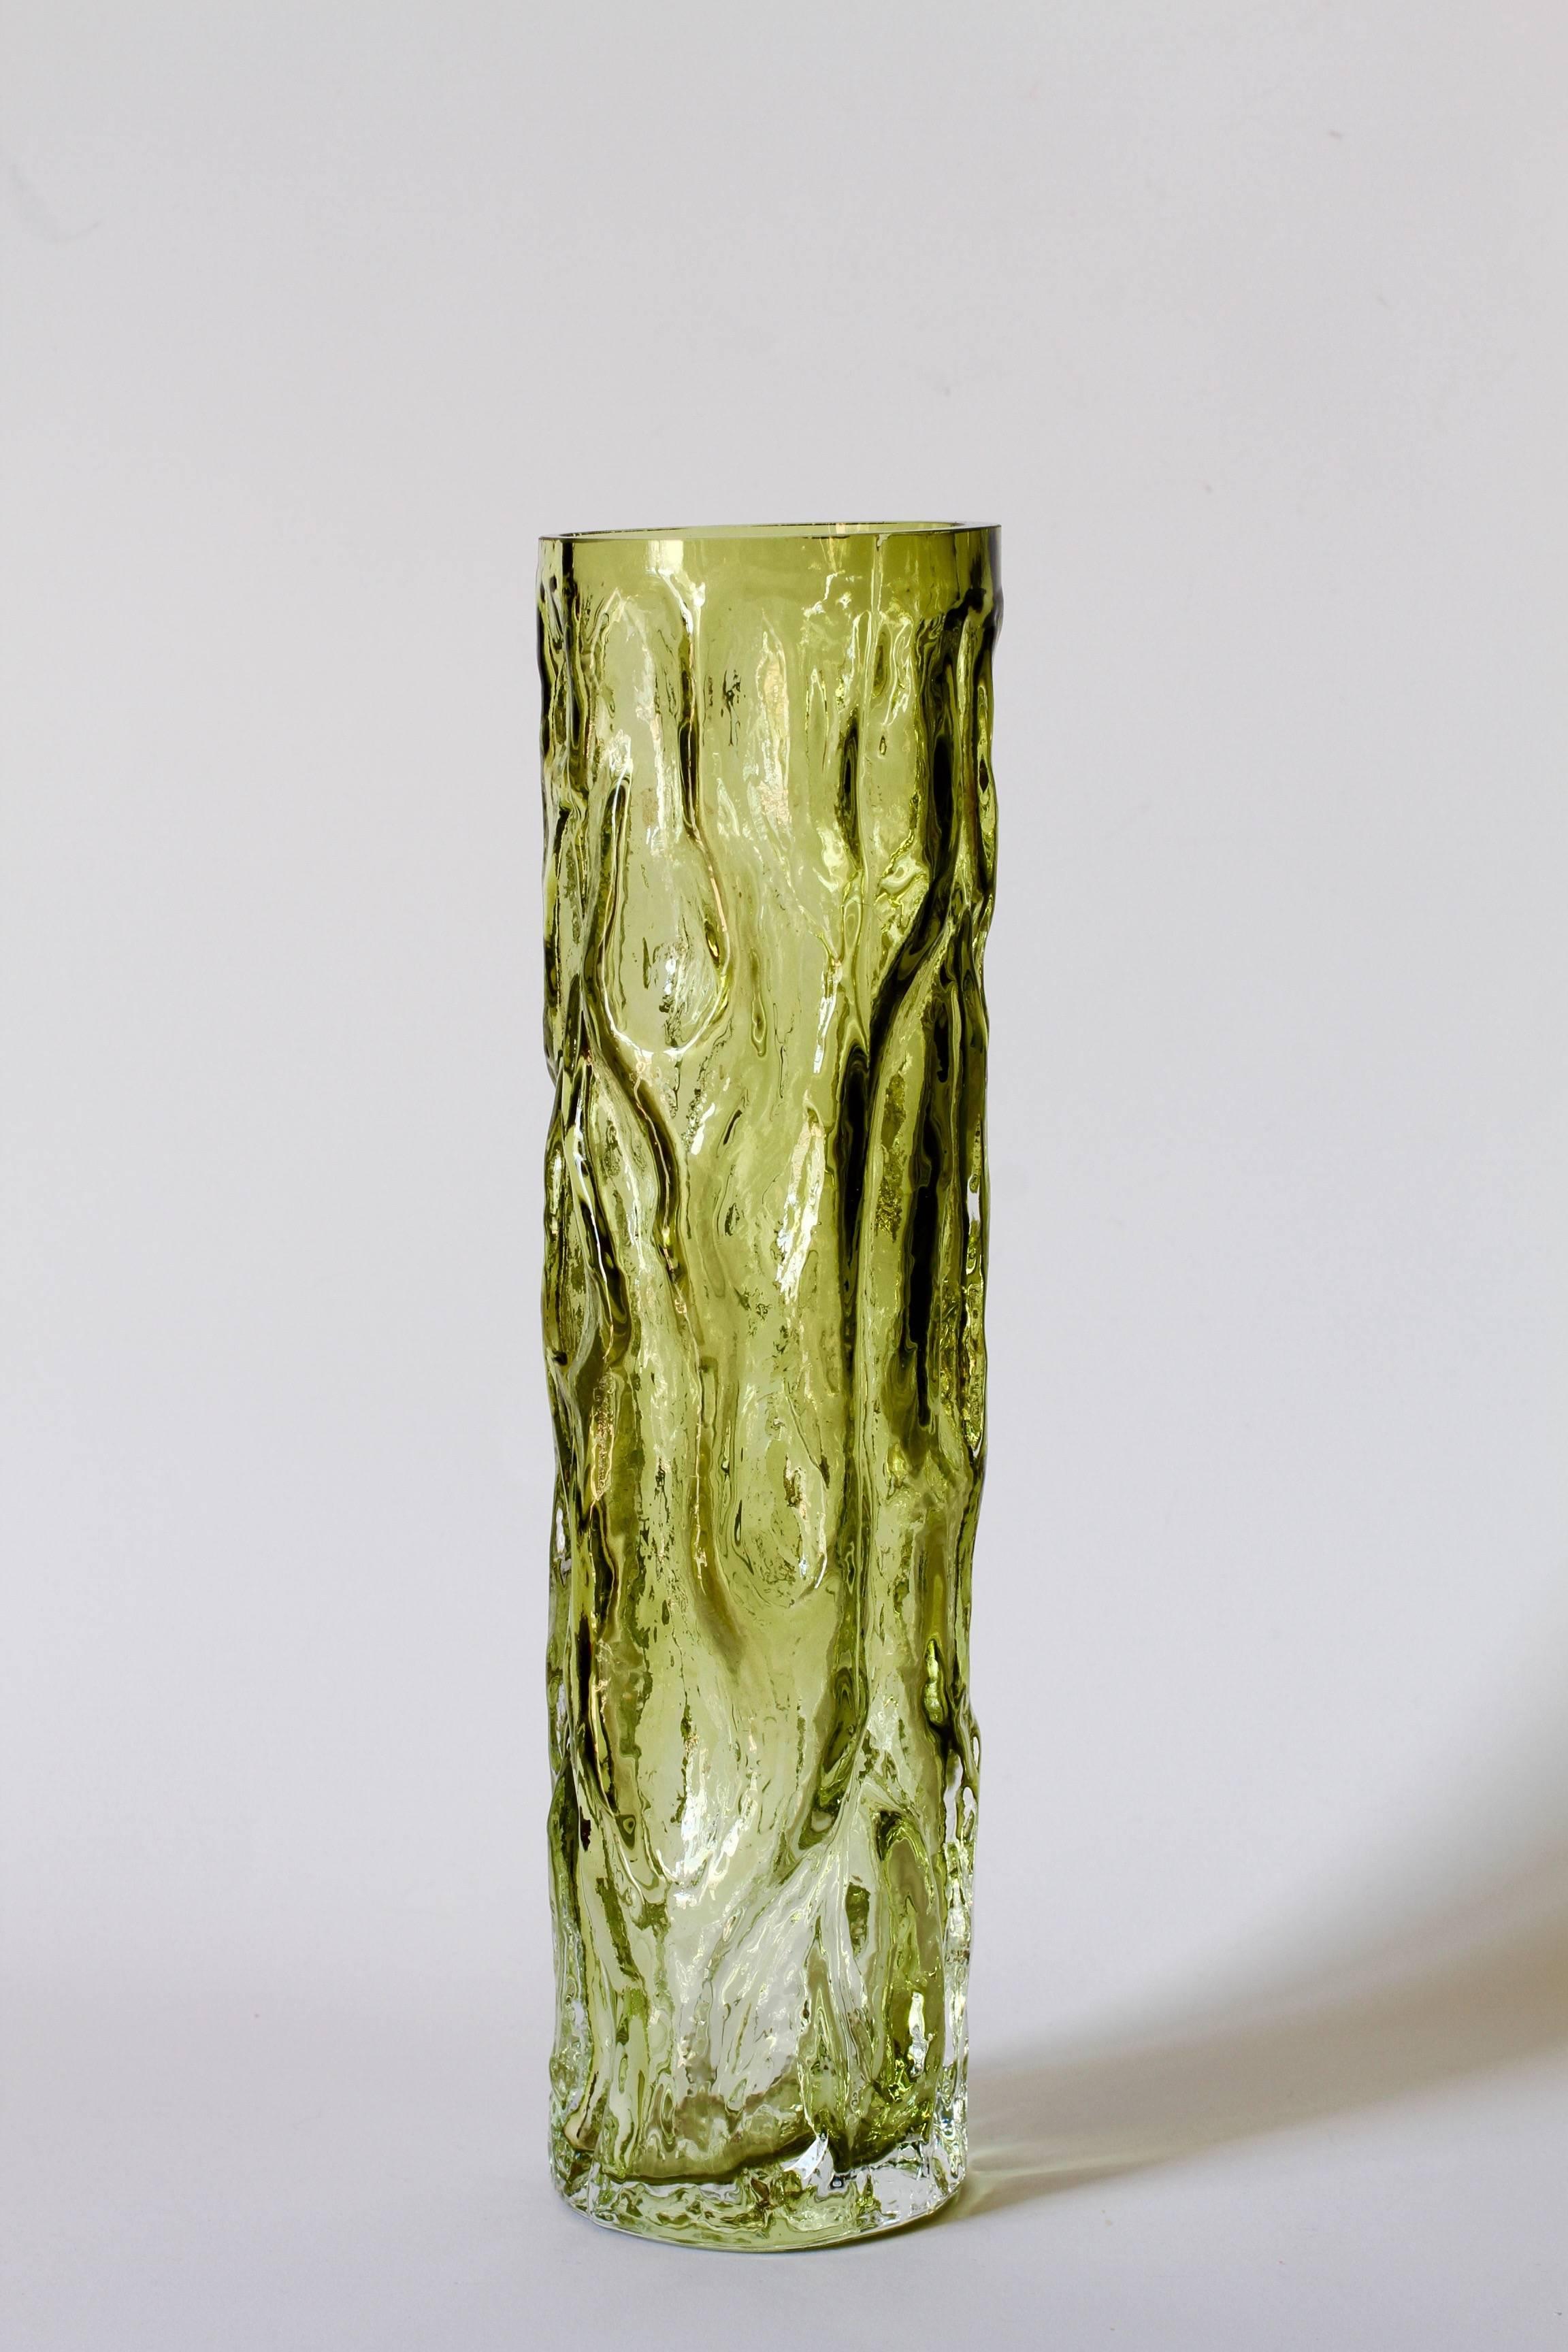 Molded Tall Vintage Vibrant Moss Green Glass Tree Bark Vase by Ingrid Glas, circa 1970s